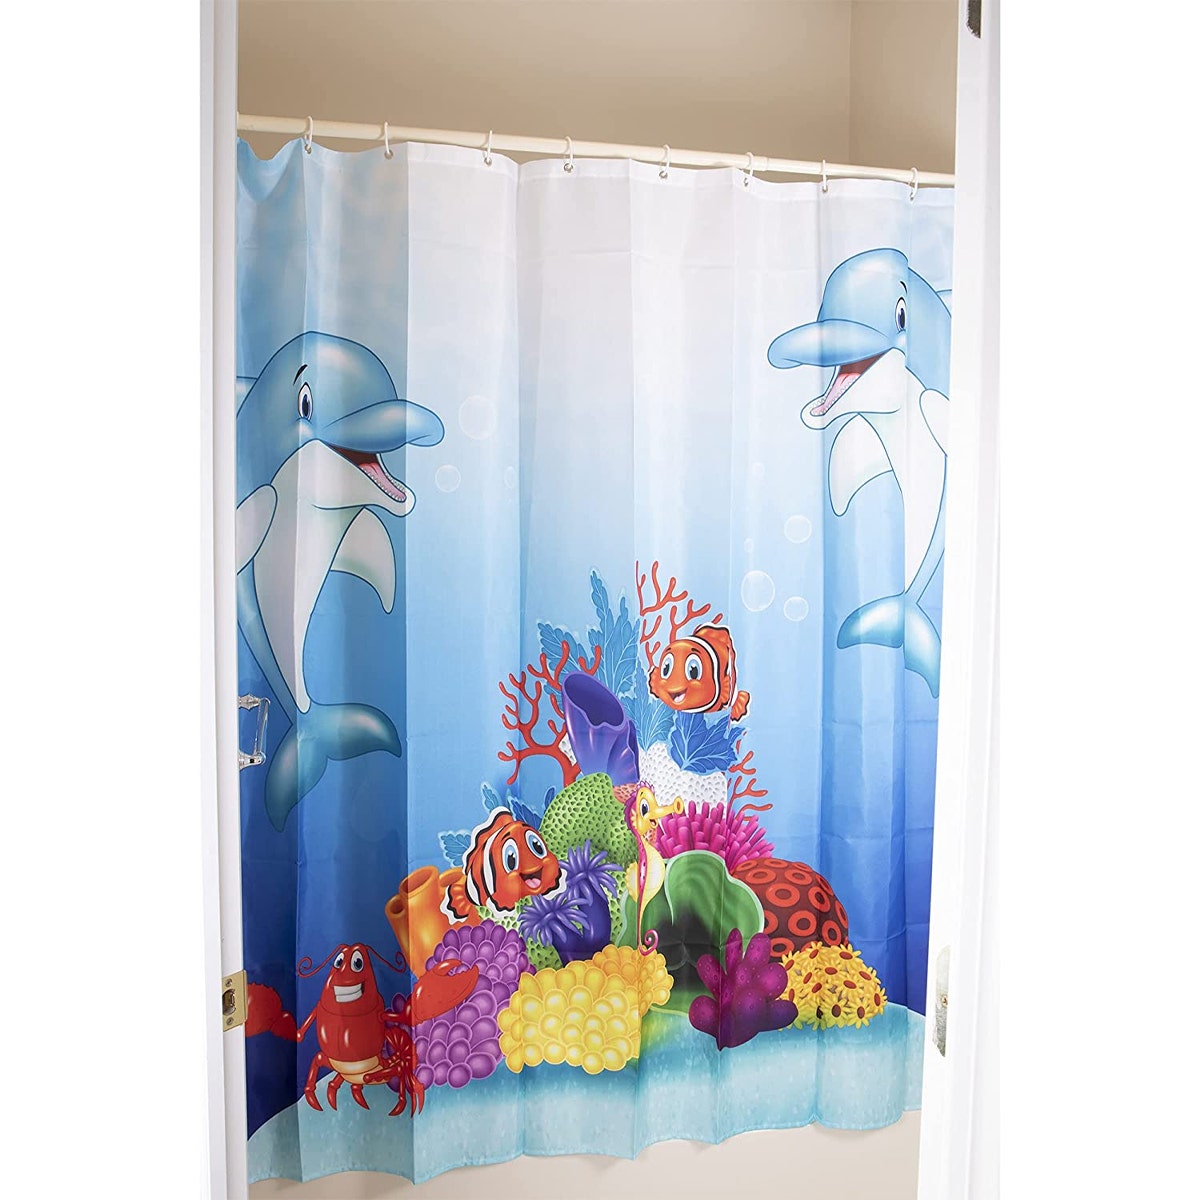 Riverbend Designs Bathroom Shower Curtain – Unique Designs